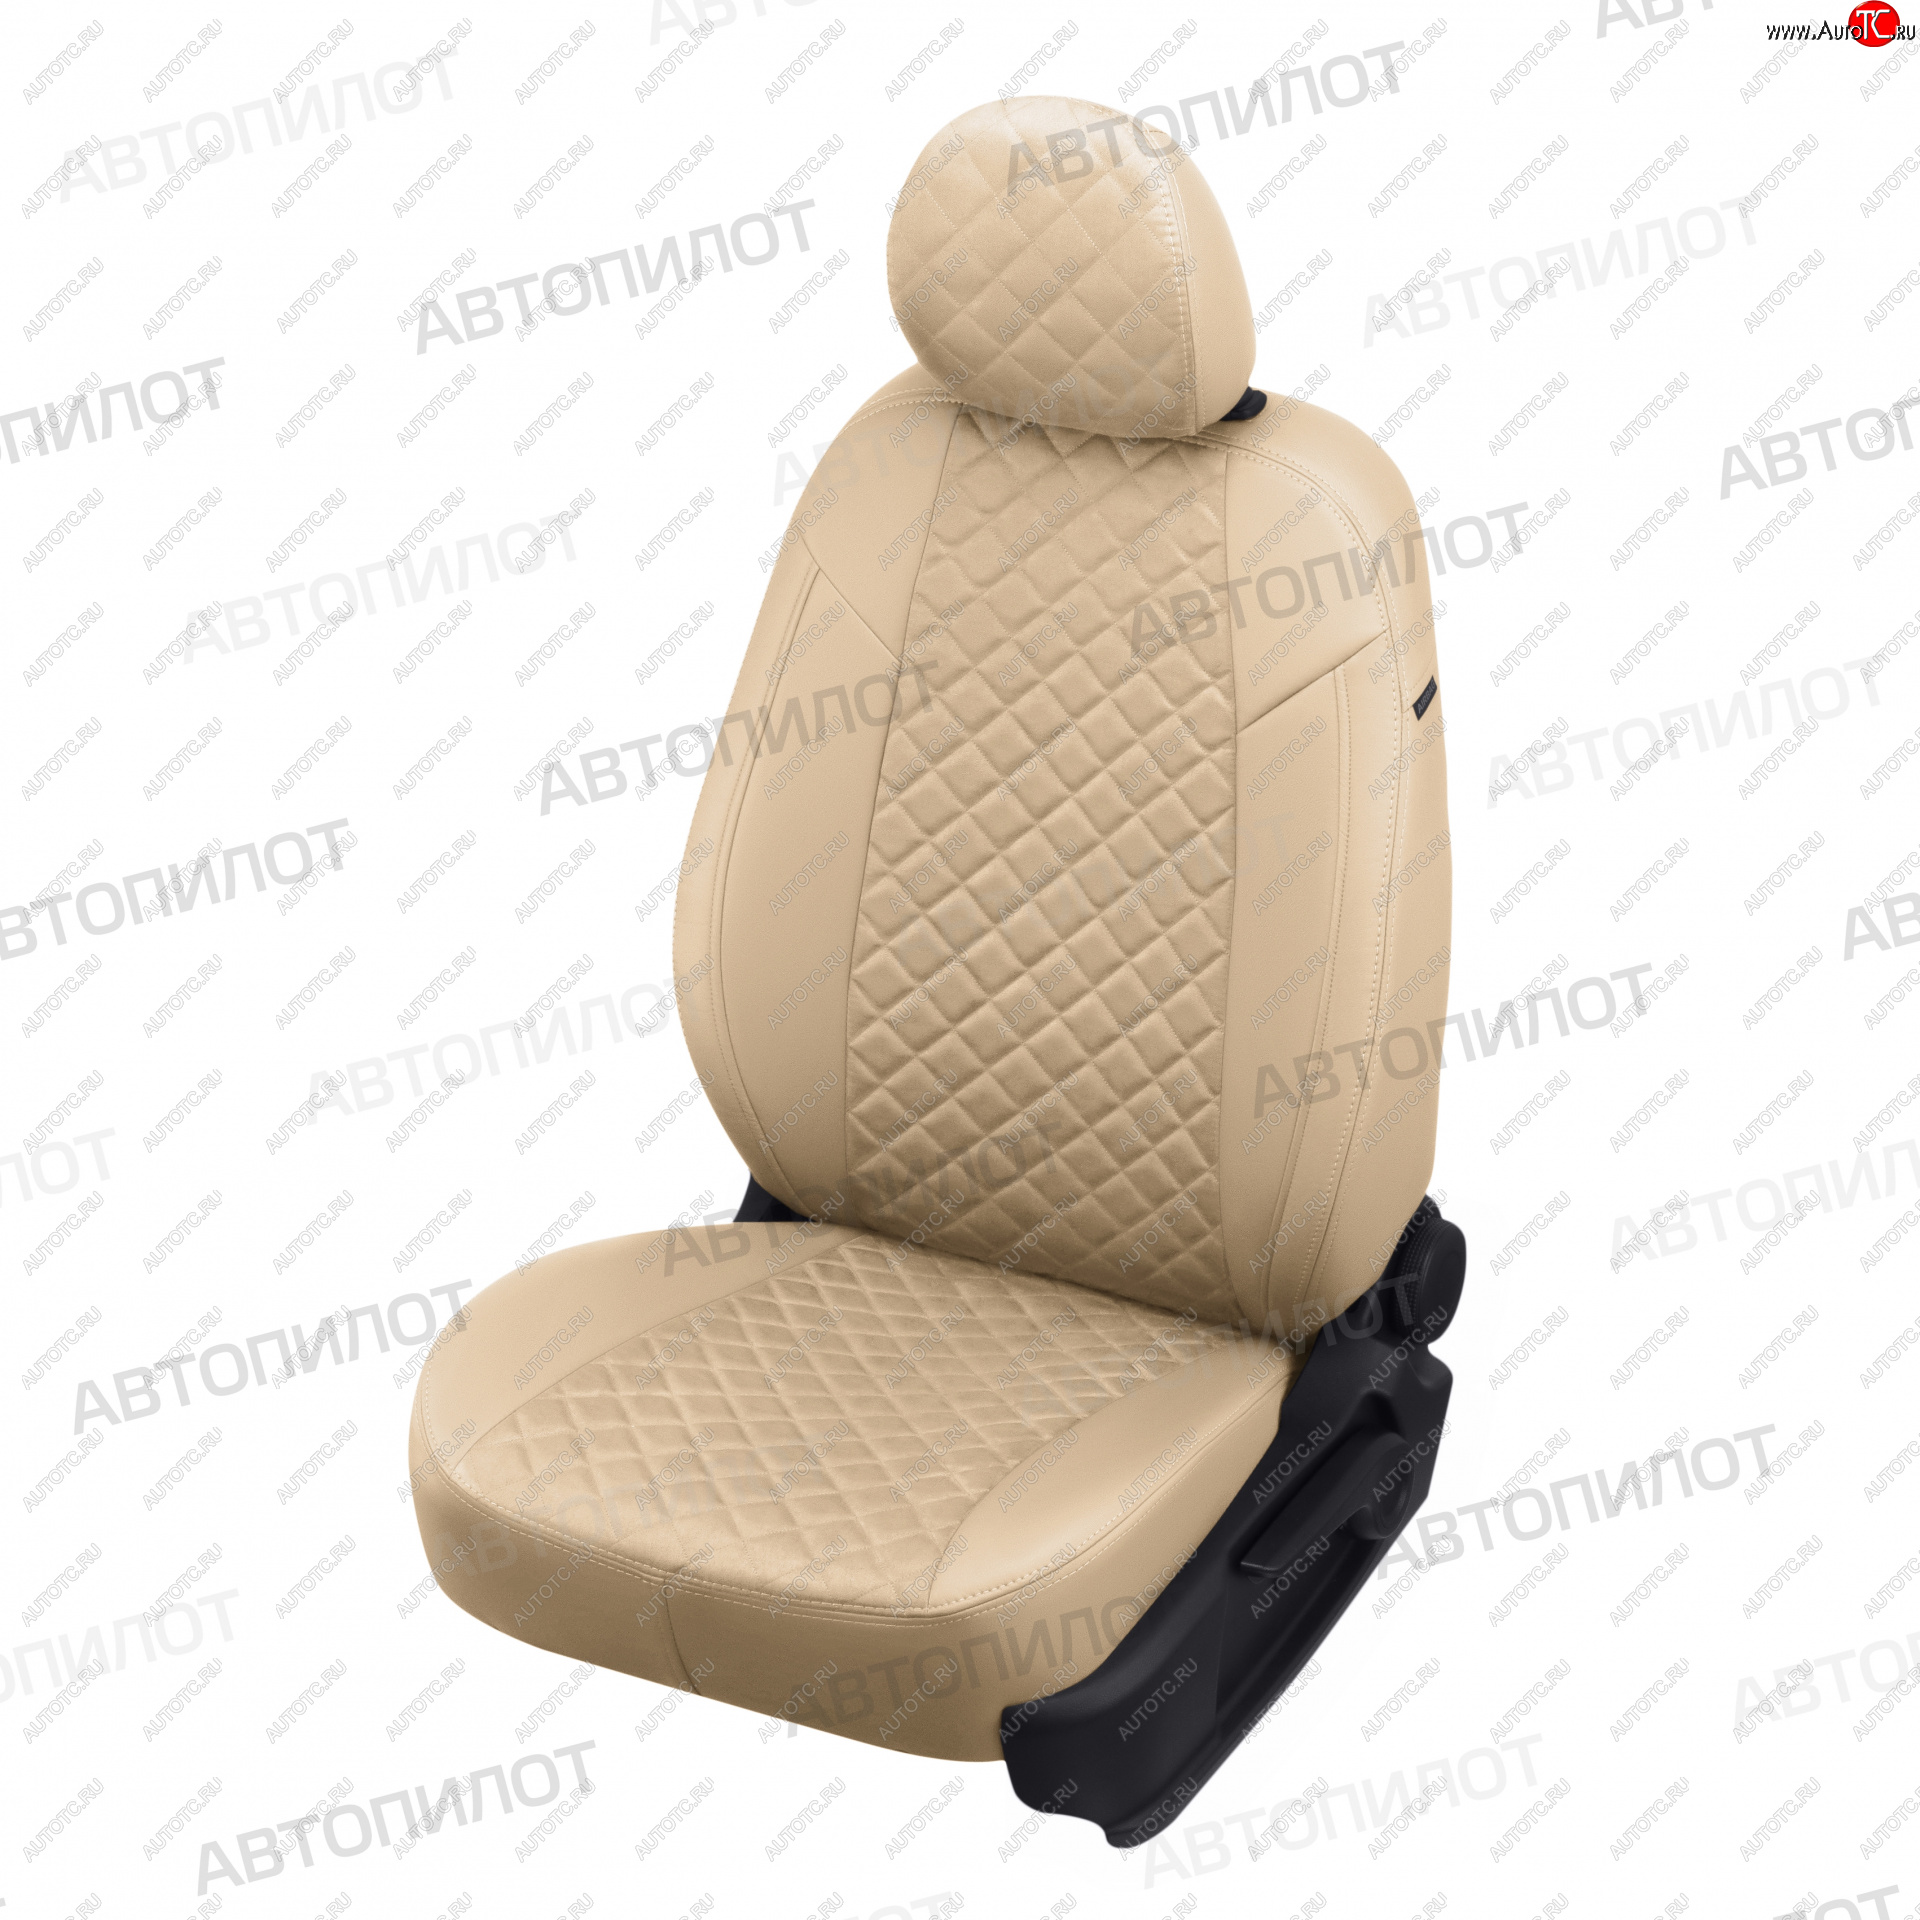 8 699 р. Чехлы сидений (3 места, экокожа/алькантара) Автопилот Ромб  Ford Transit  3 (2006-2014) (бежевый)